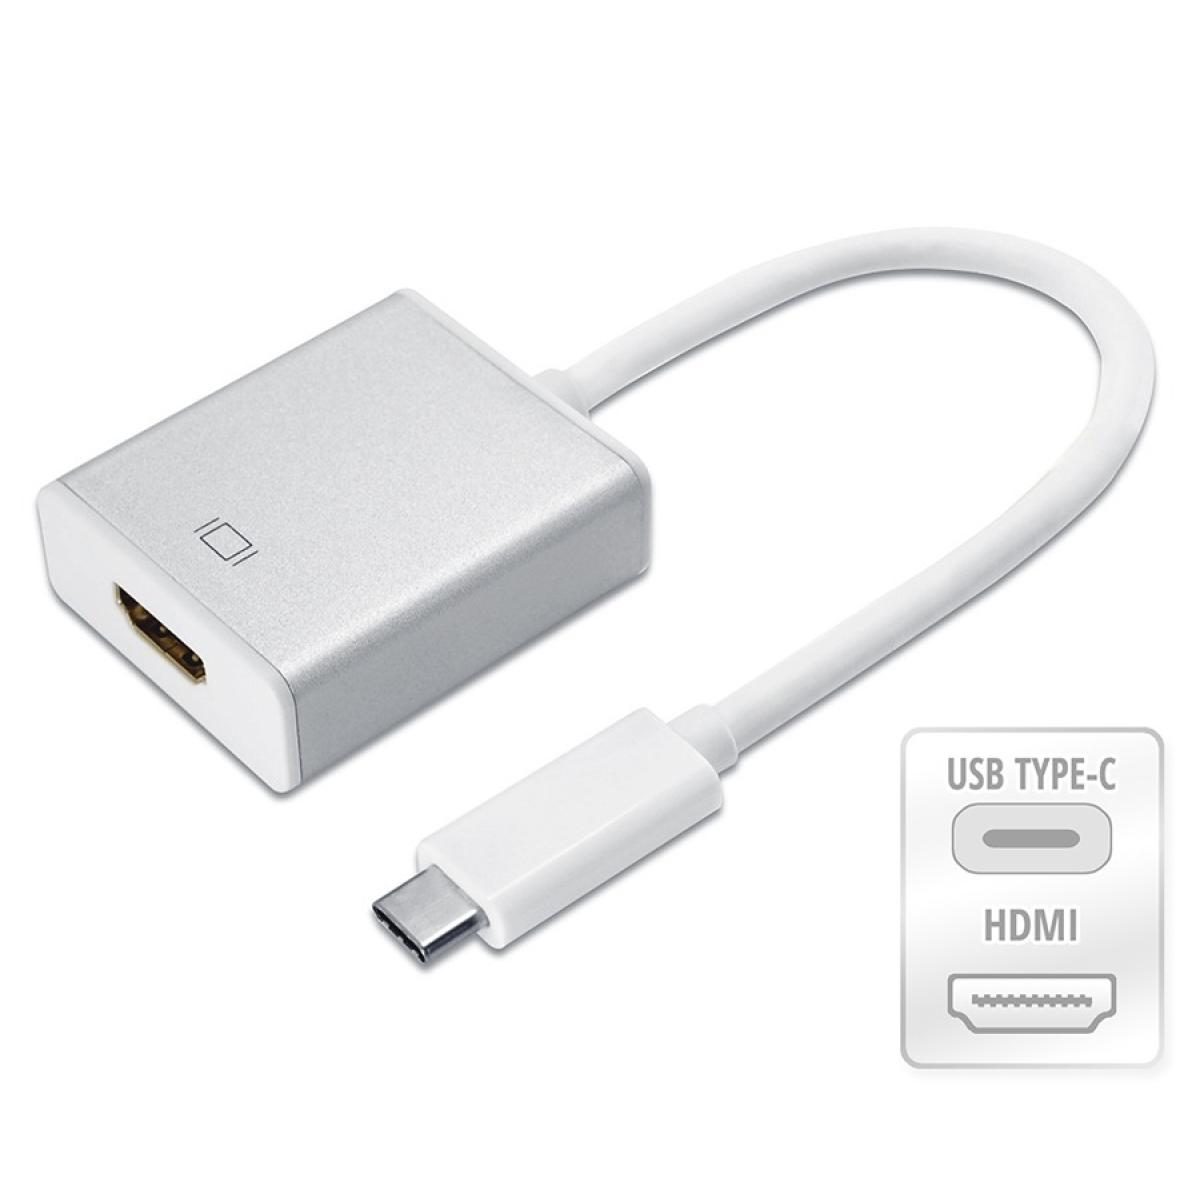 Телевизор с type c. Провод HDMI USB Type c. Переходник с HDMI USB на USB Type-с. Адаптер HDMI USB Type c. Переходник с тайп си на HDMI.